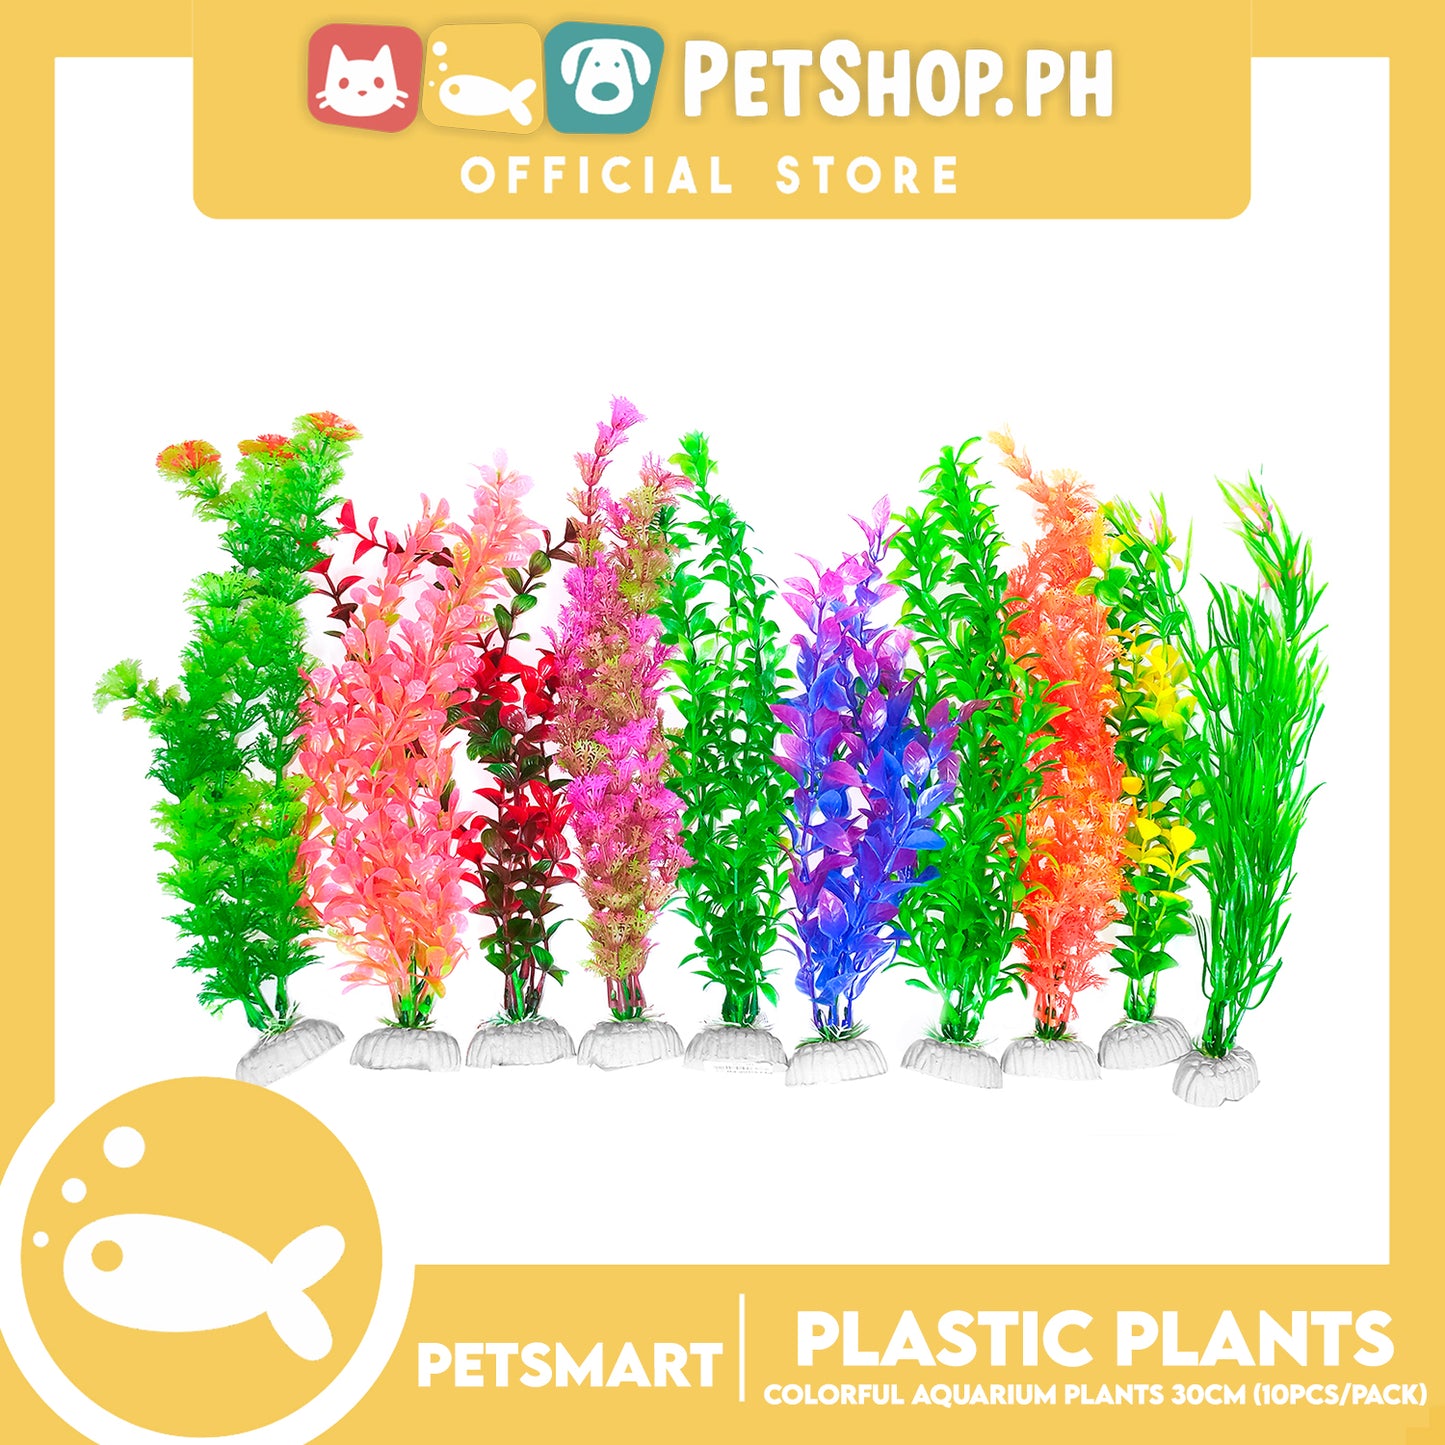 30cm Plastic Plant For Aquarium, Artificial Fish Tank Water Grass Plants Set Of 10pcs (Assorted Designs And Colors) Aquarium Plant Ornament Decoration Accessories